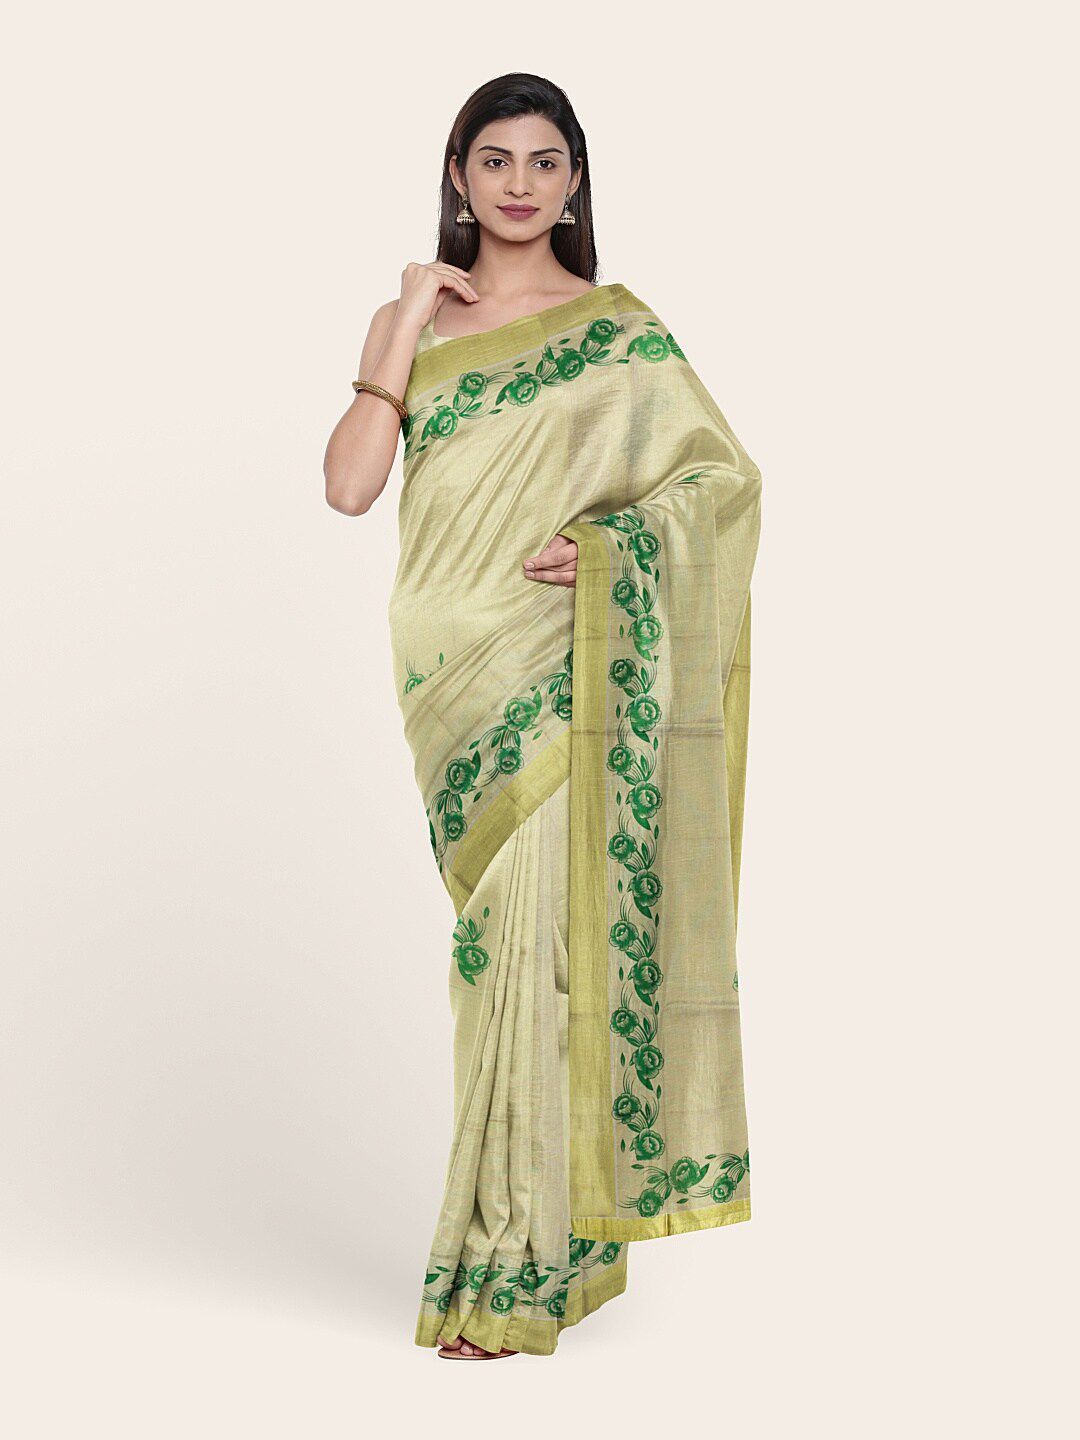 Pothys Gold-Toned & Green Ethnic Motifs Zari Pure Cotton Saree Price in India